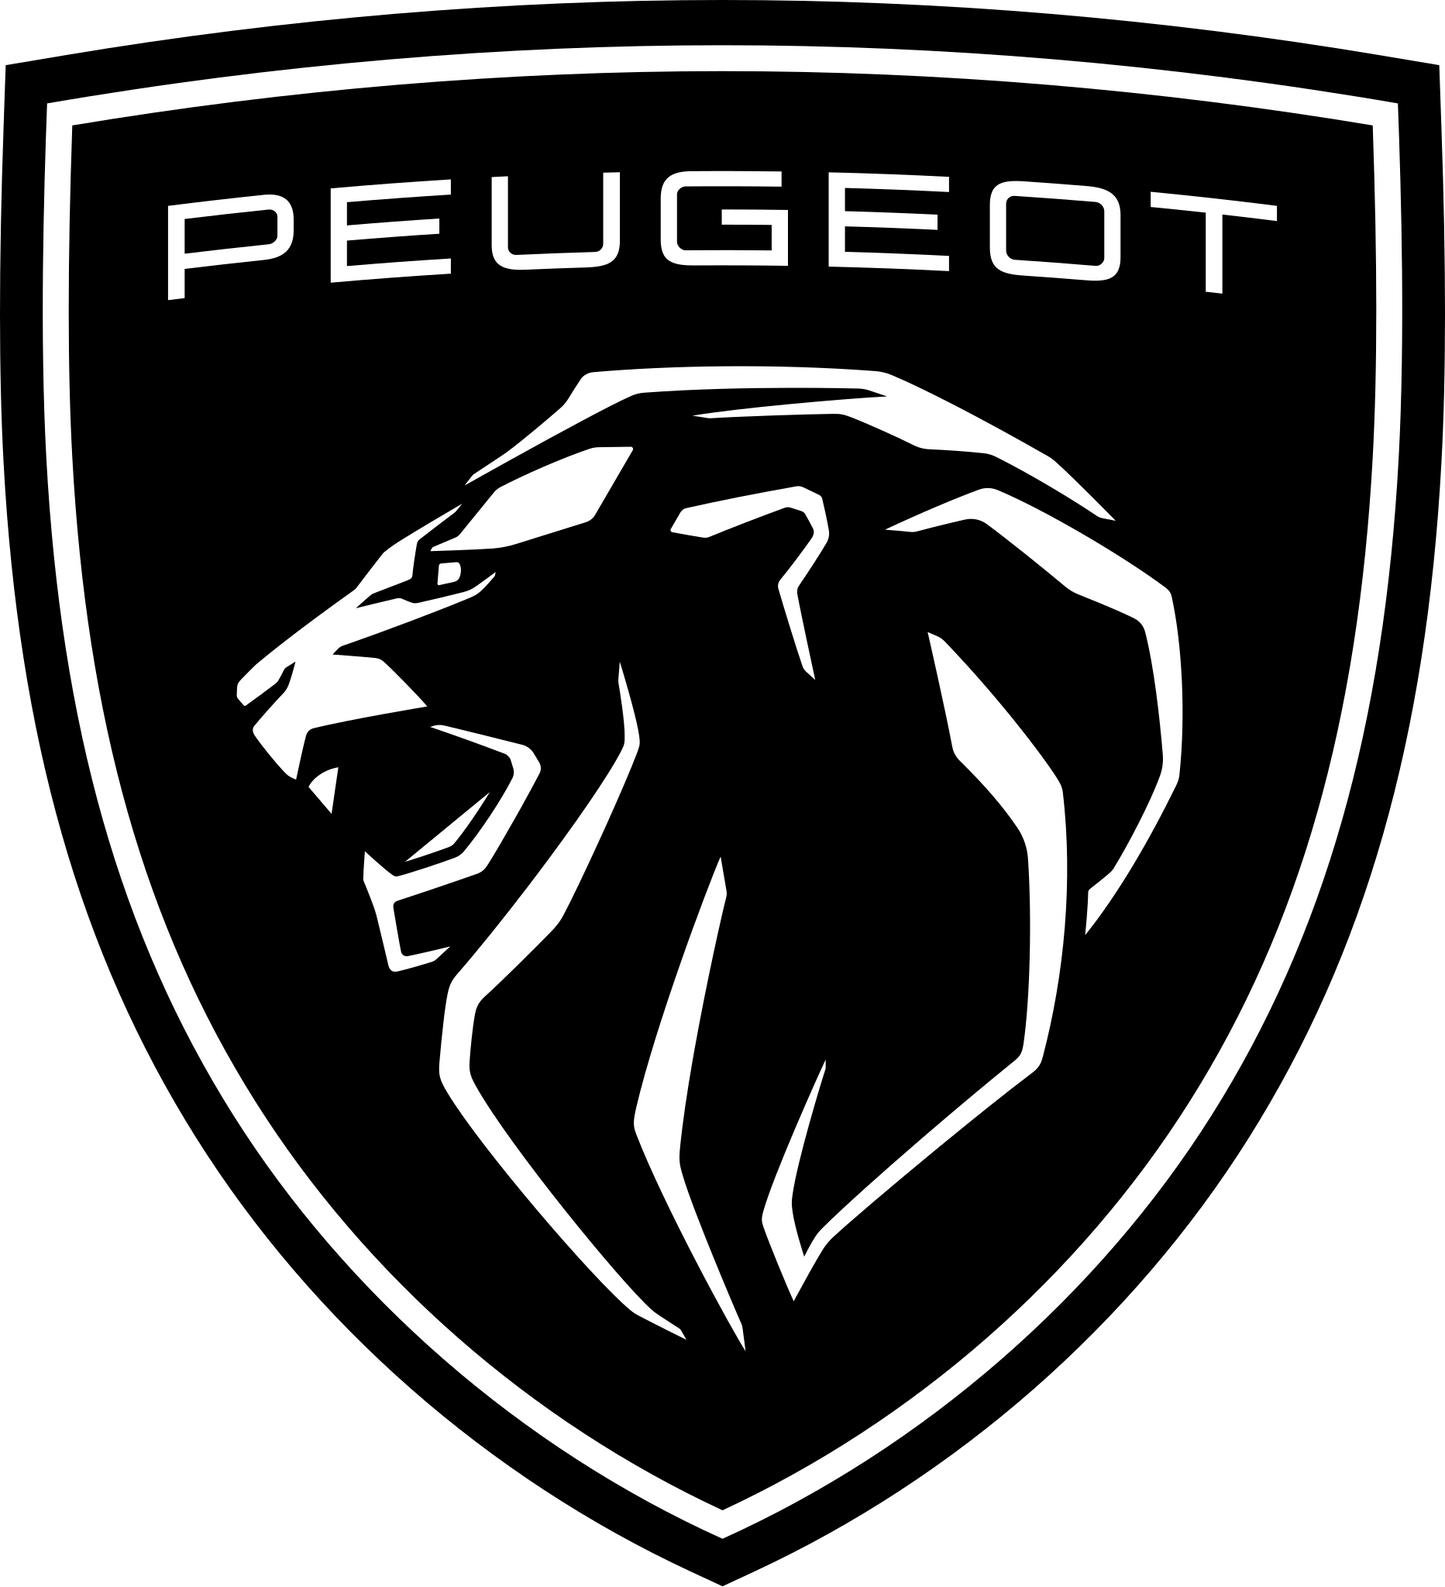 Kód autorádia Peugeot